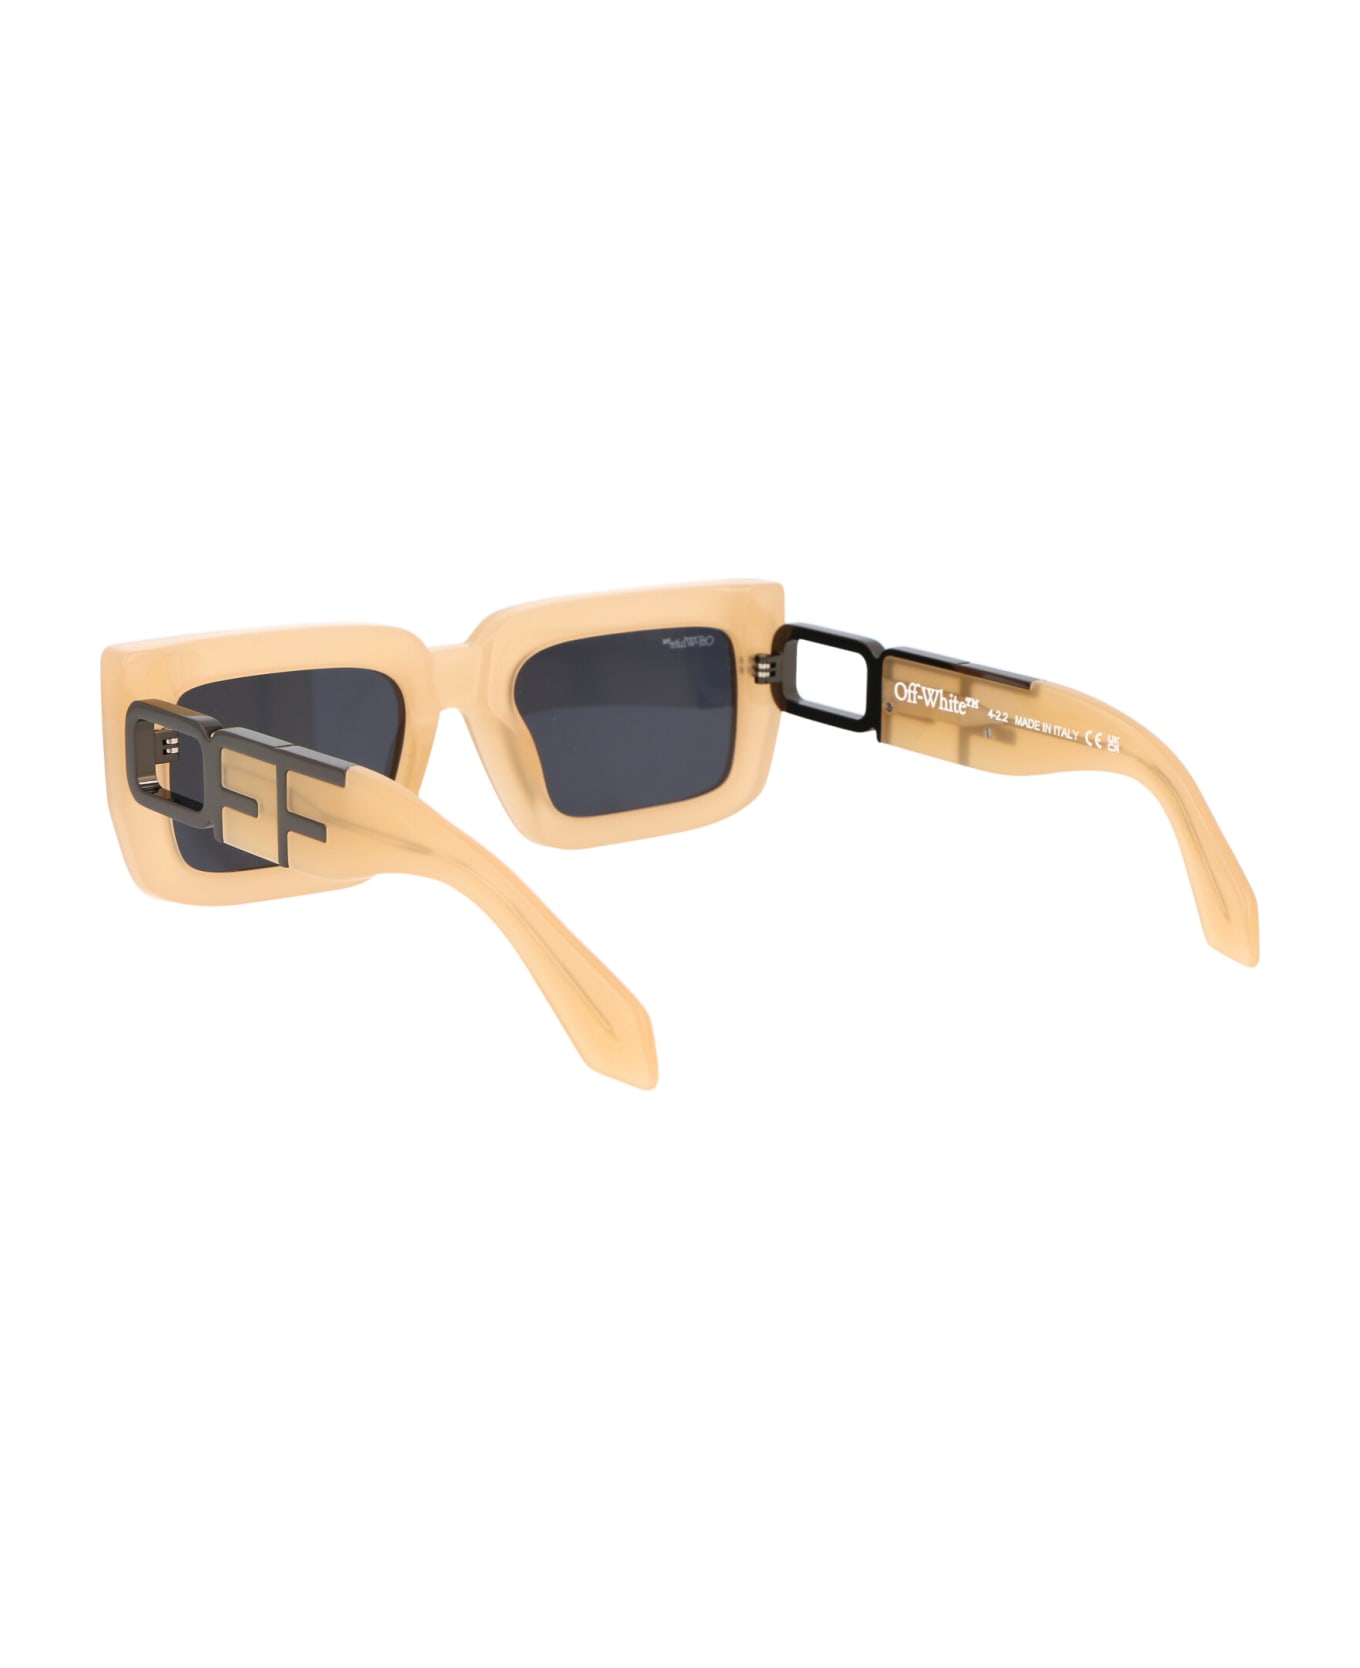 Off-White Boston Sunglasses - 1707 SAND DARK GREY サングラス